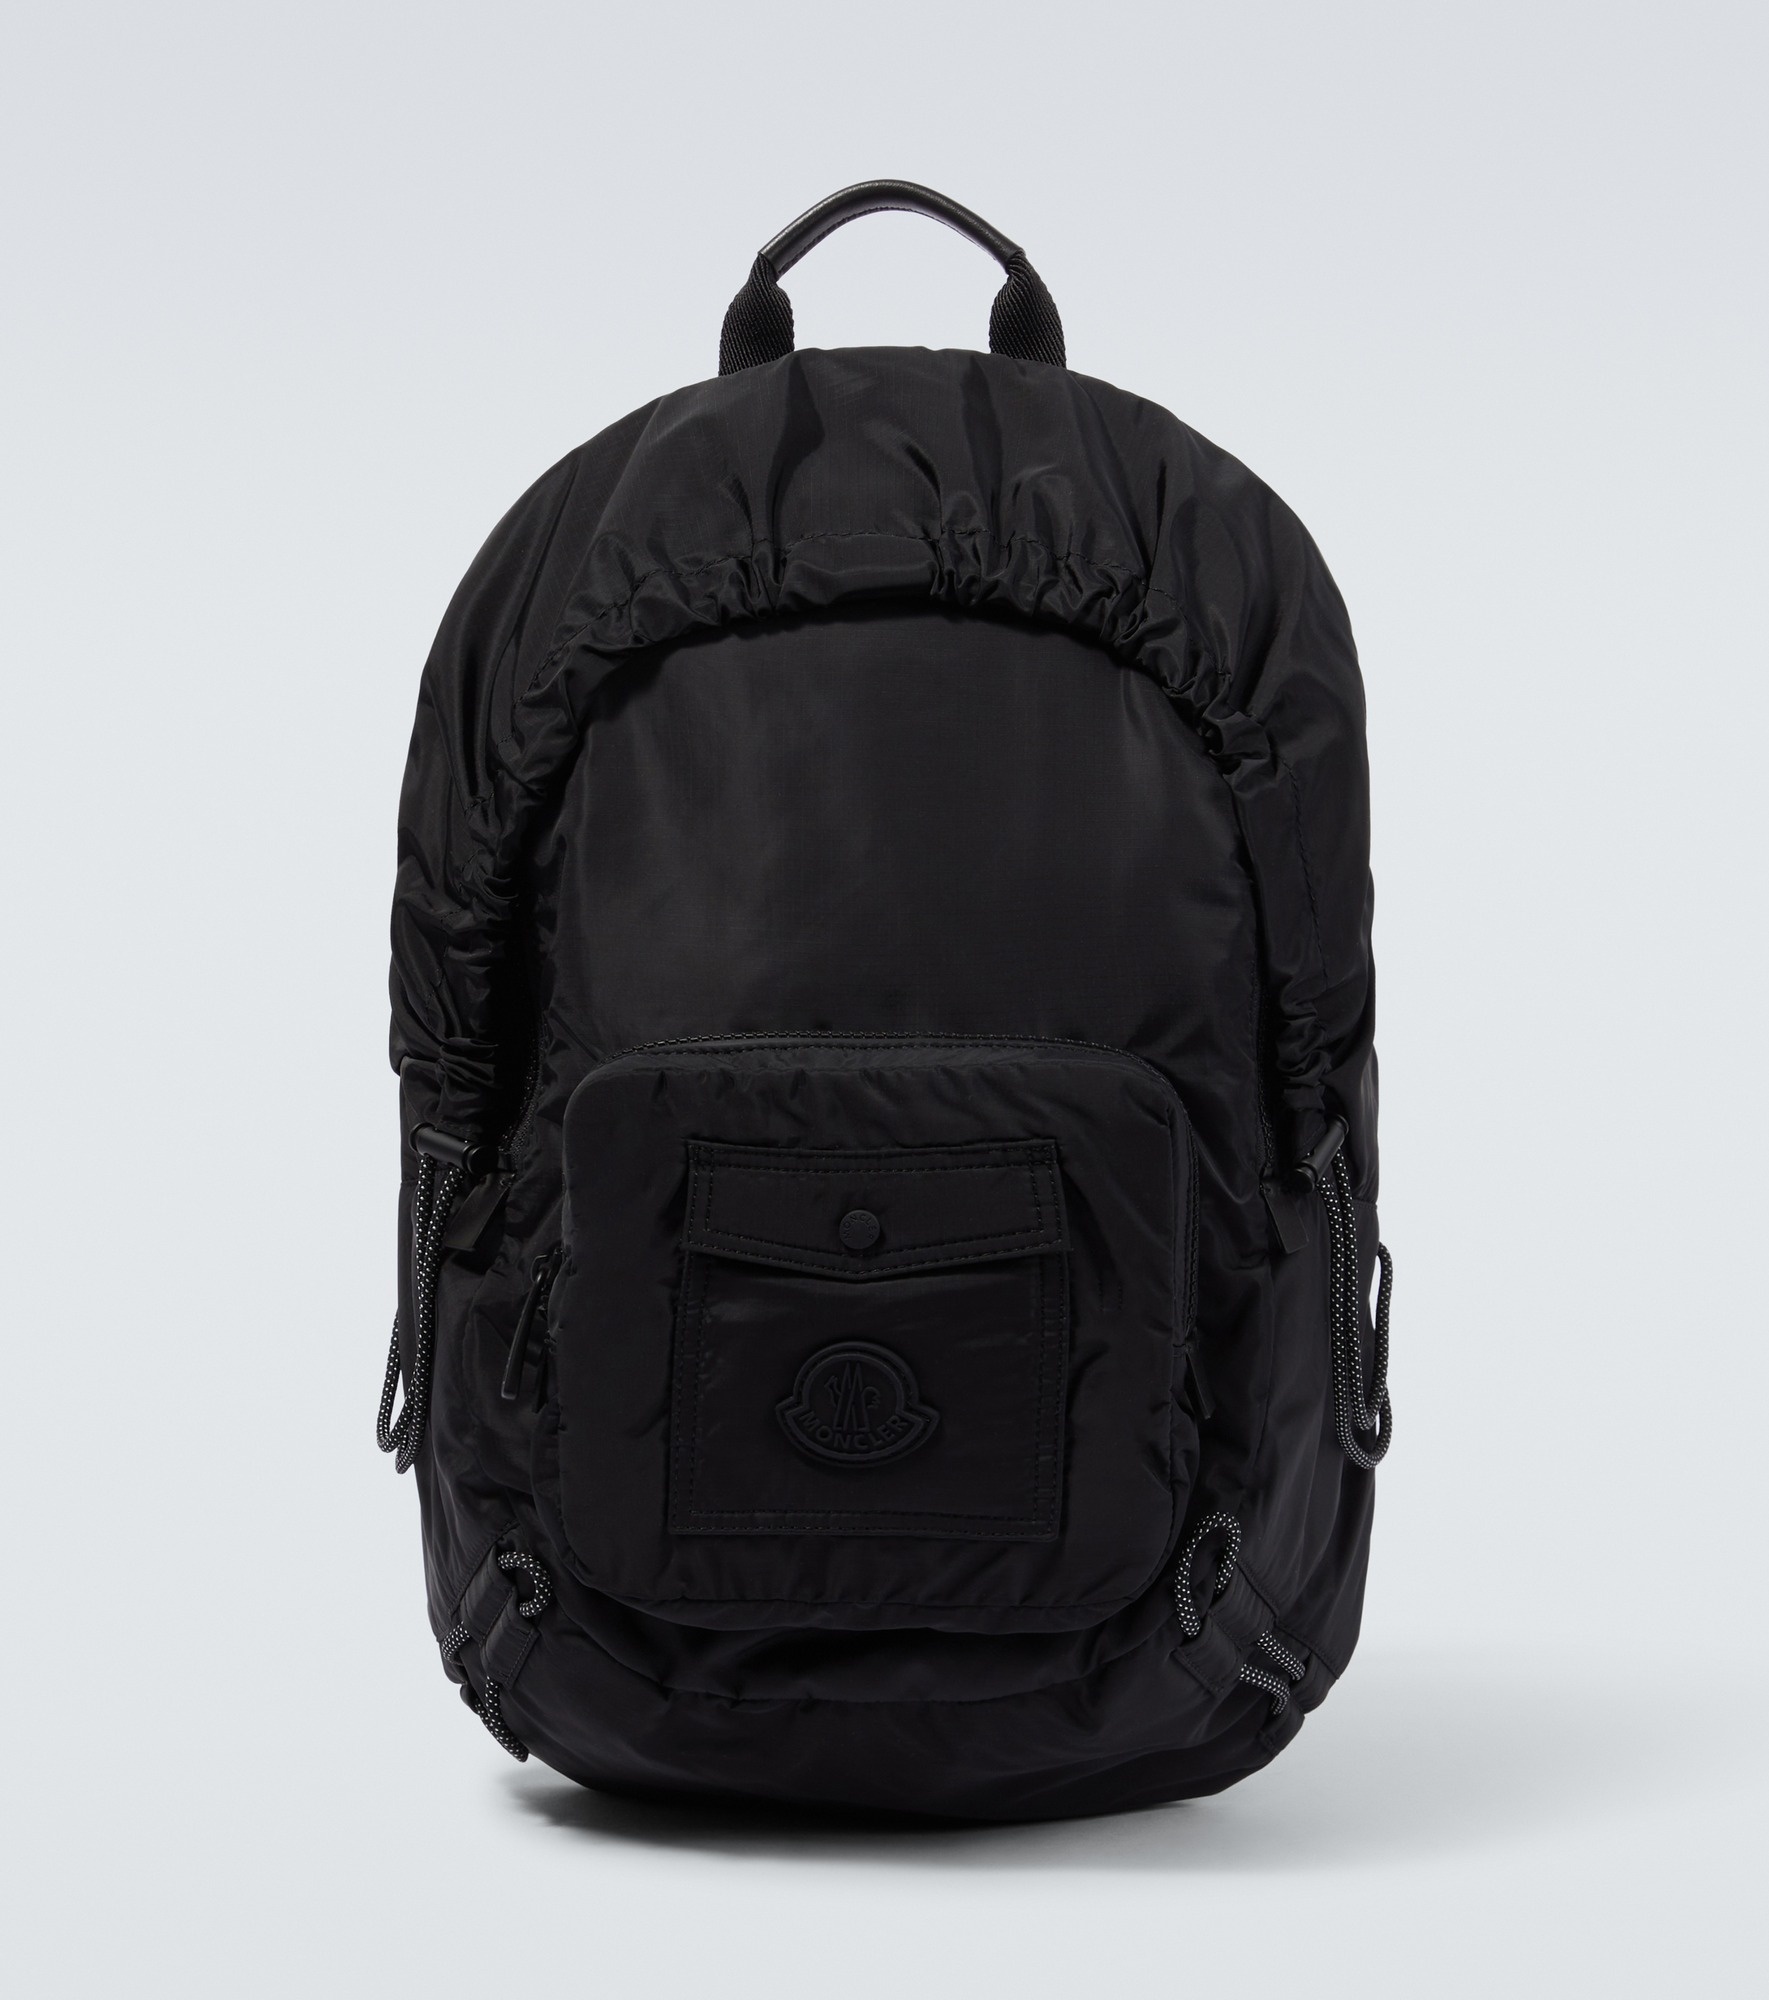 Makaio backpack - 1